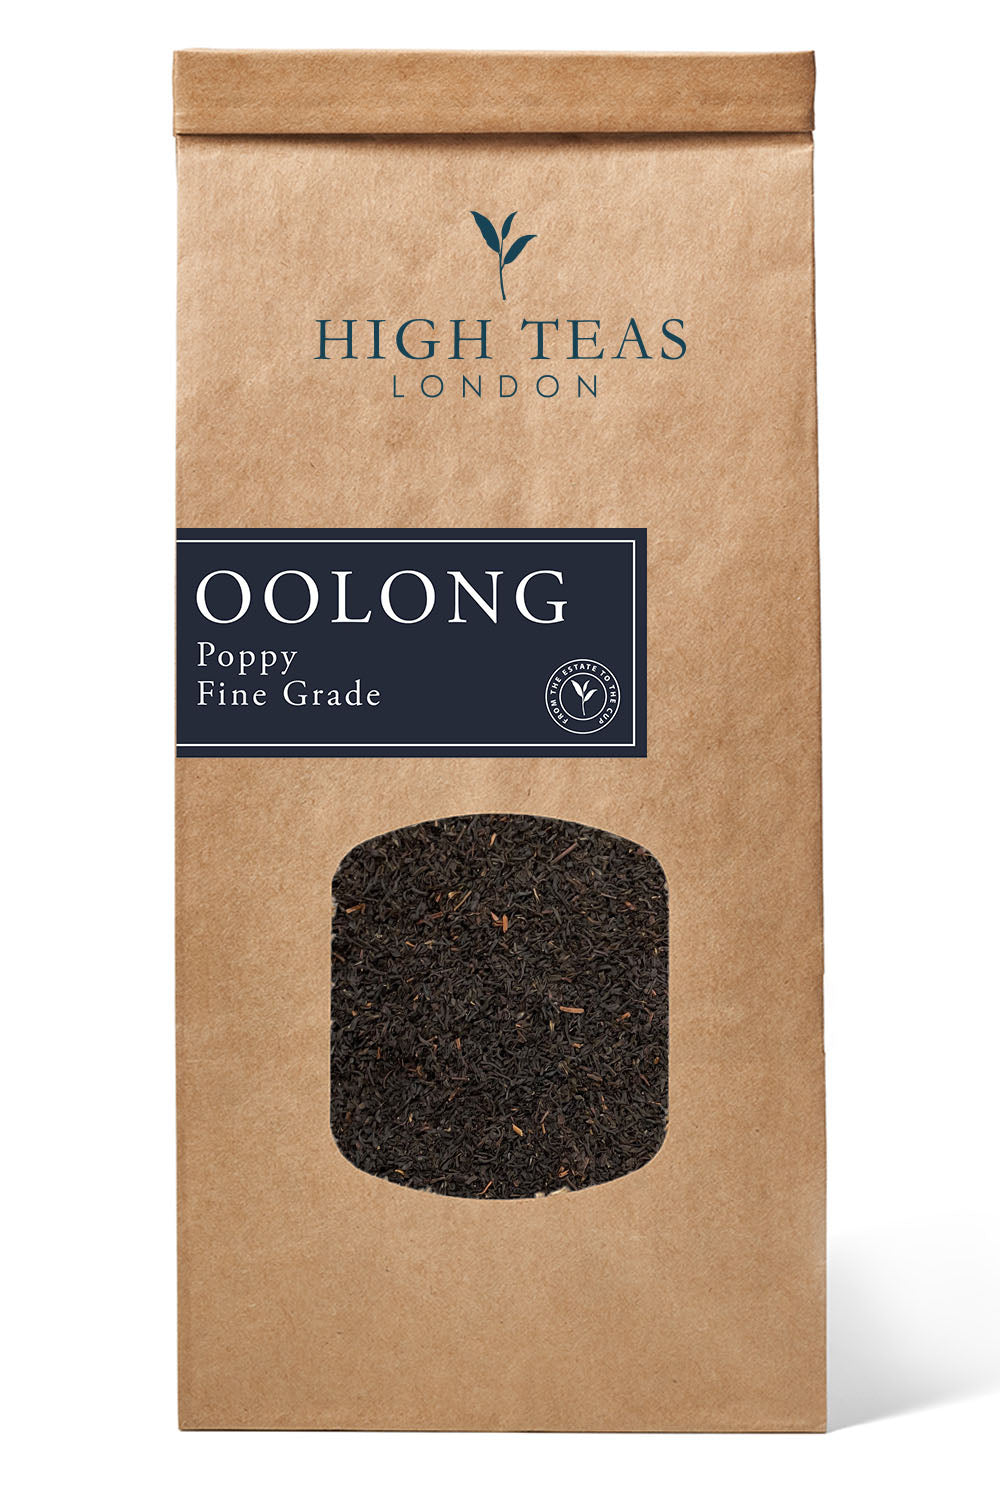 Formosa Oolong - Poppy Fine Grade-250g-Loose Leaf Tea-High Teas